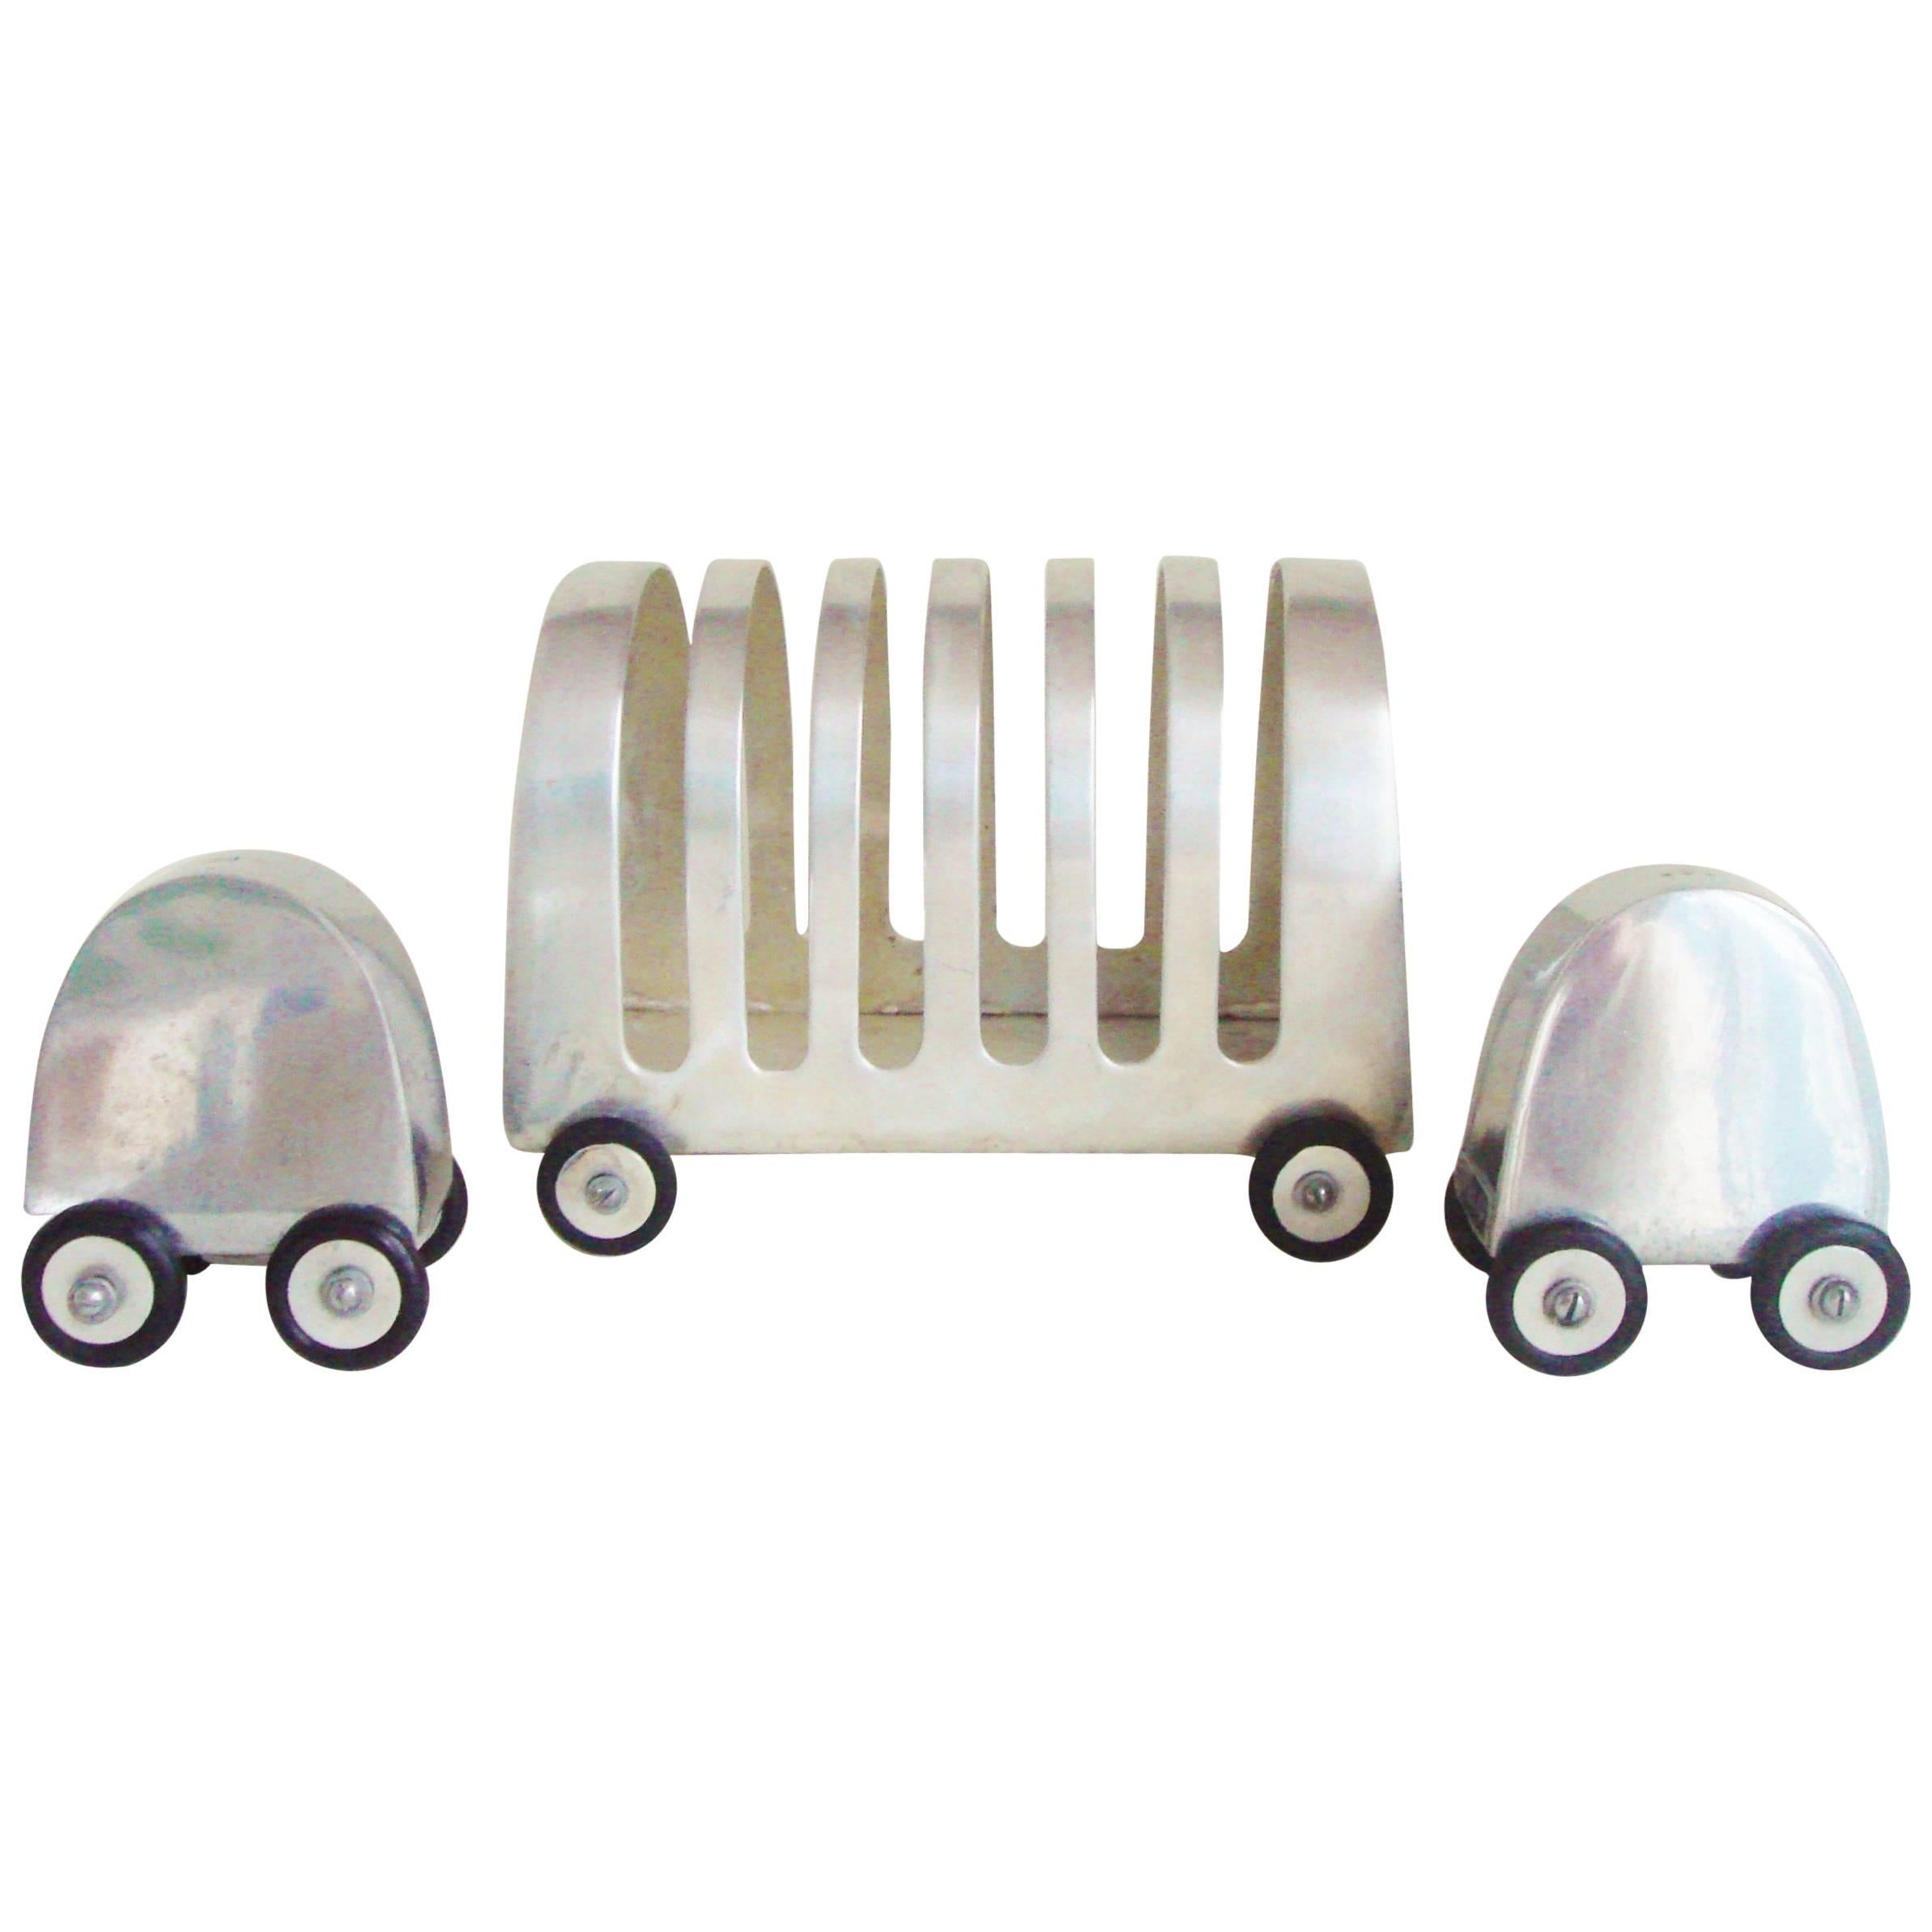 English 1960s Polished Aluminium Cruet and Toast Rack Three-Piece Set on Wheels